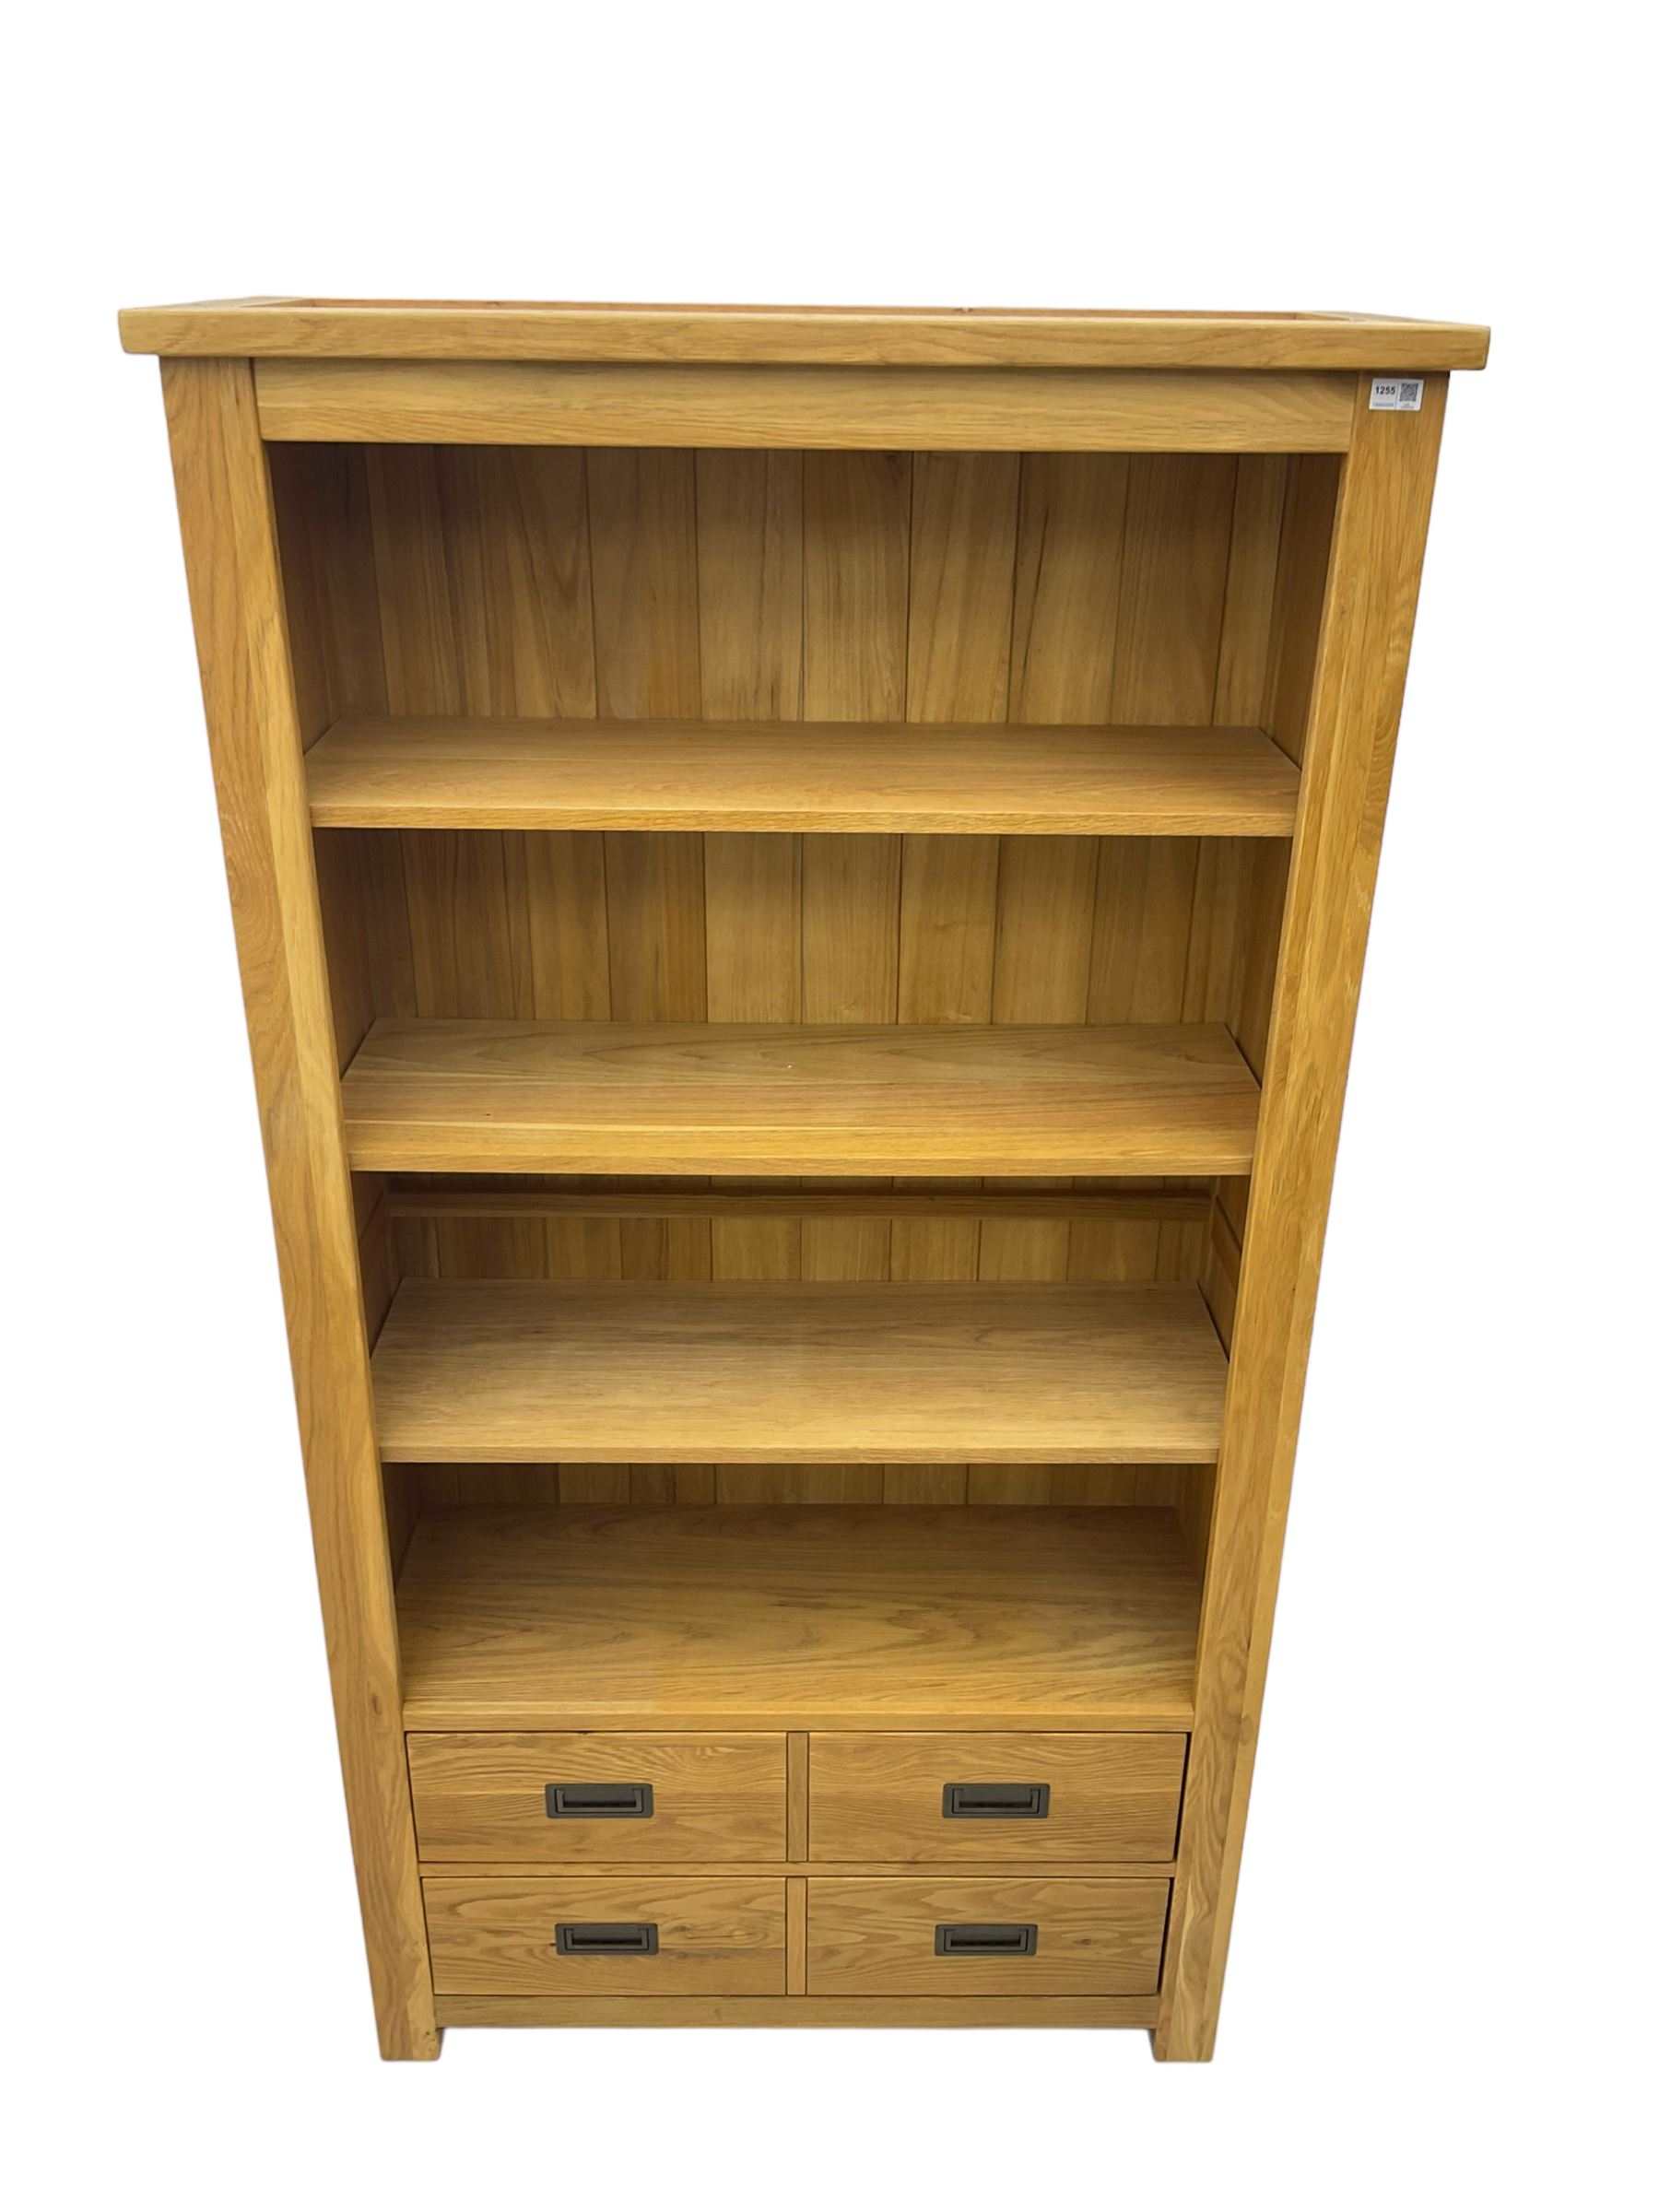 'Galloway' oak open wide bookcase - Image 7 of 7